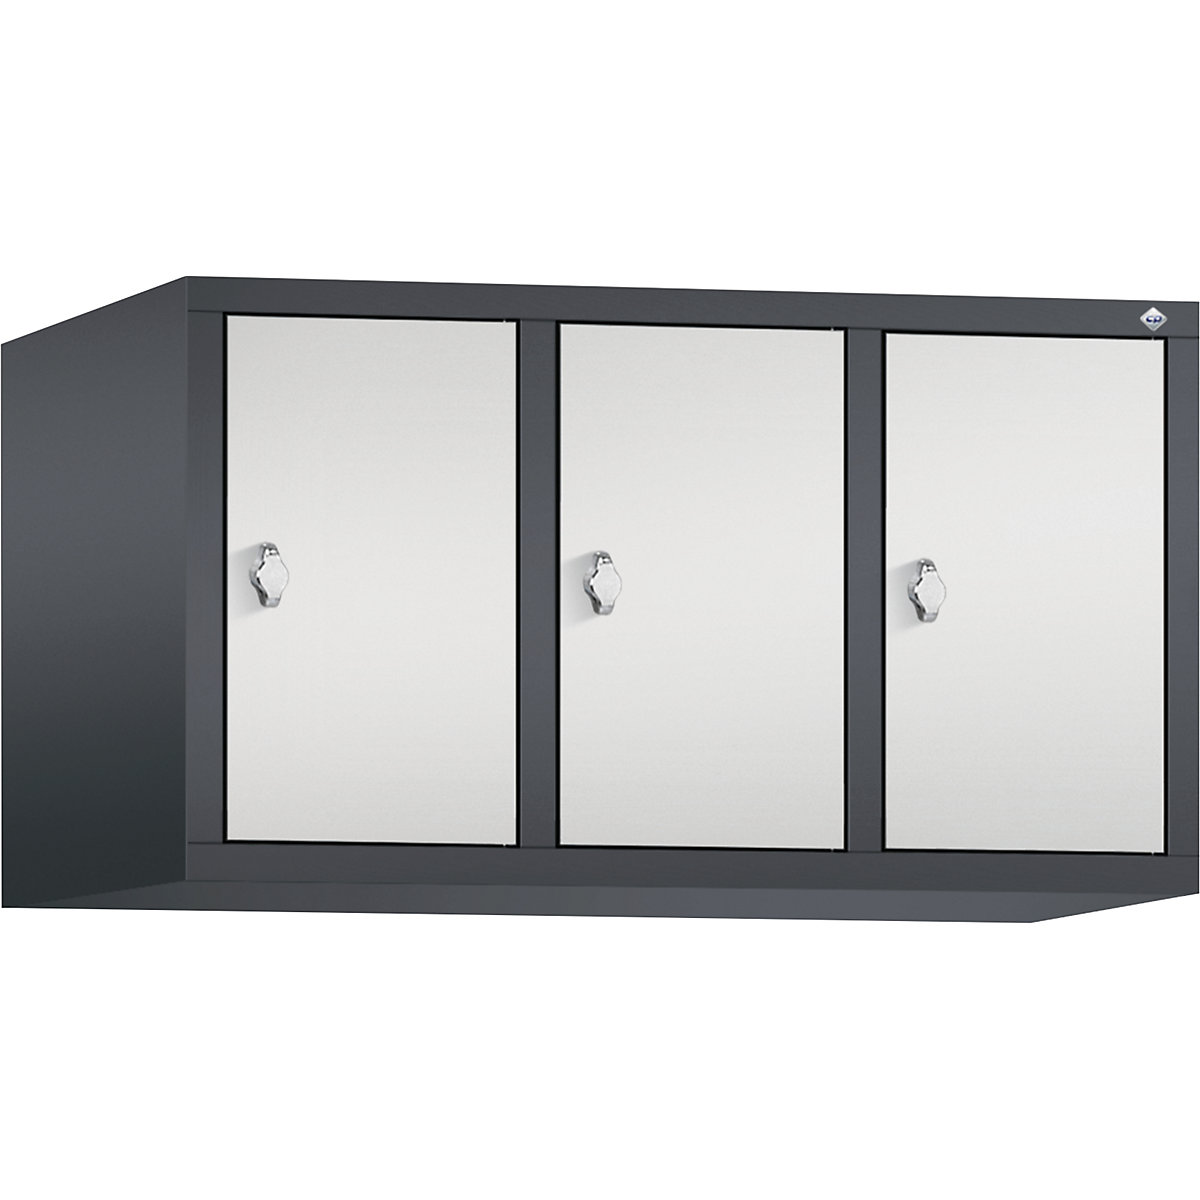 C+P – Altillo CLASSIC, 3 compartimentos, anchura de compartimento 300 mm, gris negruzco / gris luminoso